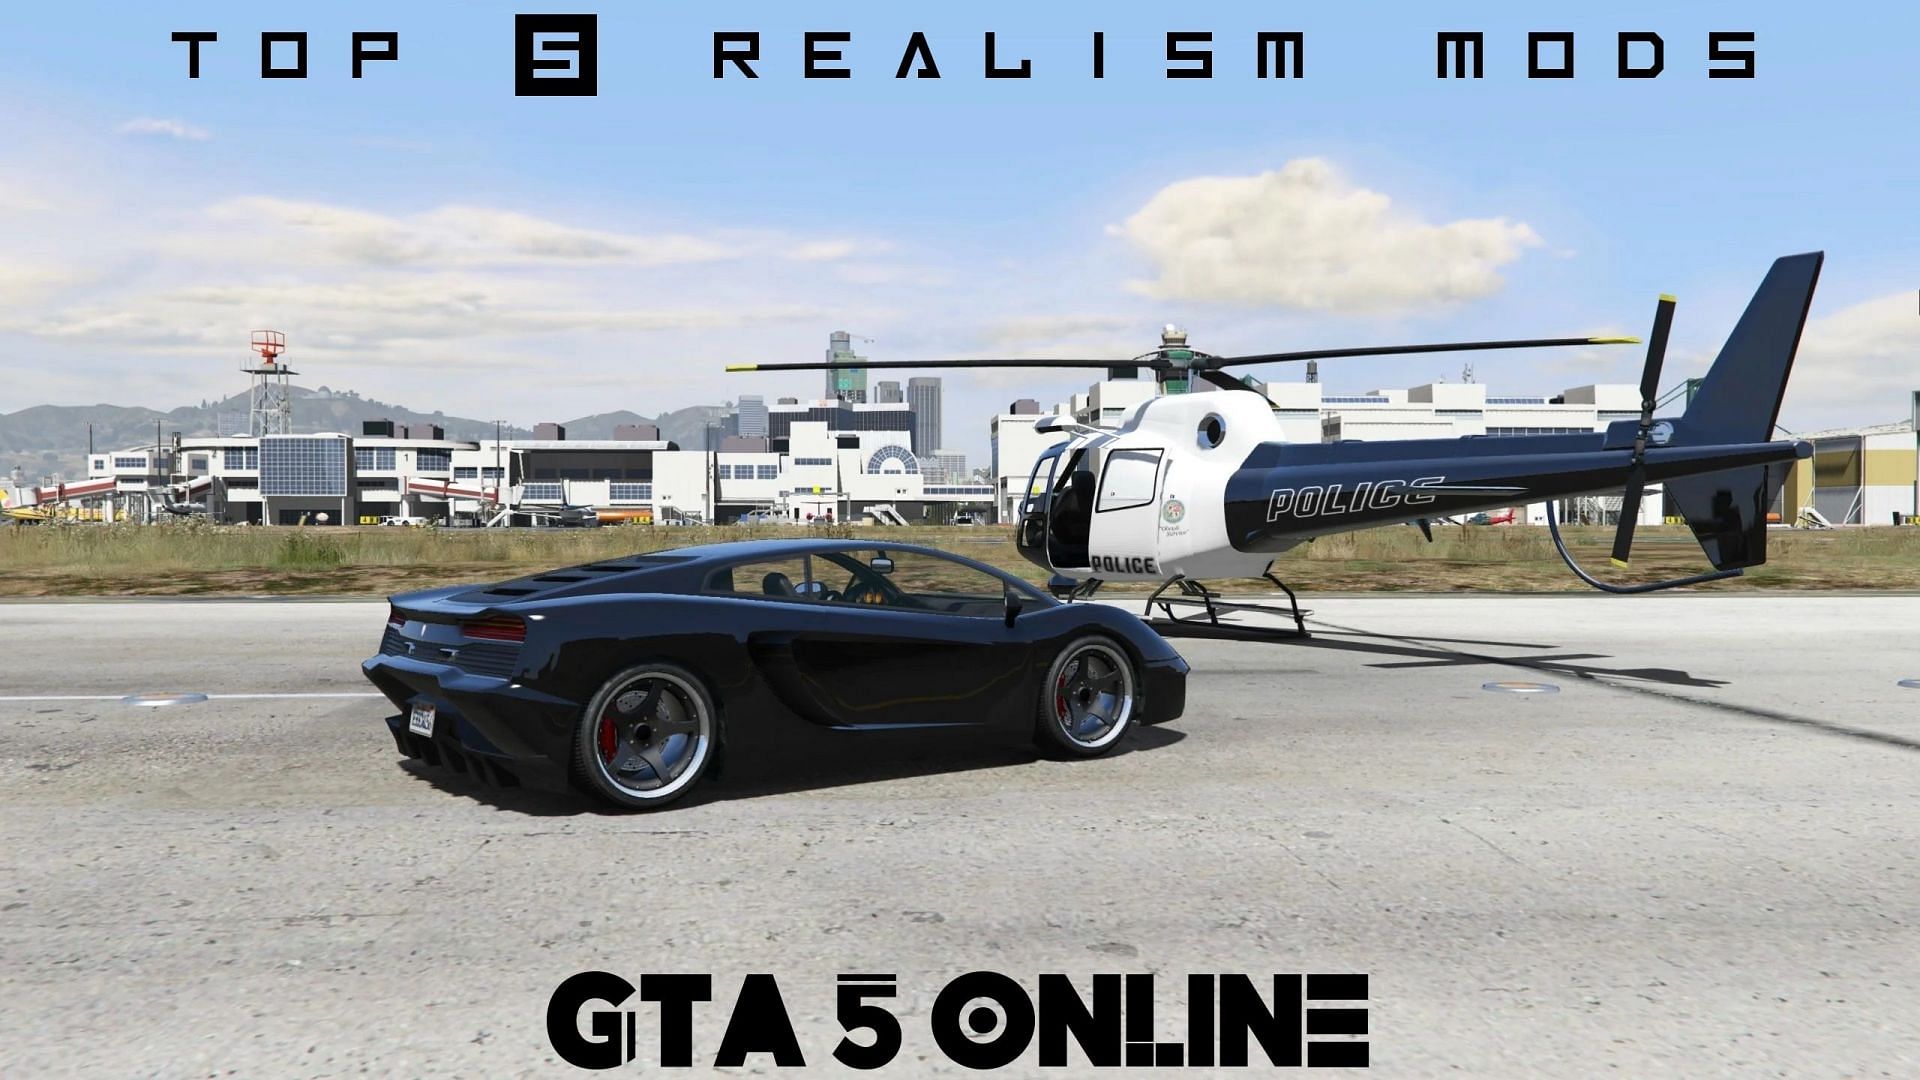 Realism Mods are very popular in GTA Online [Image via GTA5mod.net]